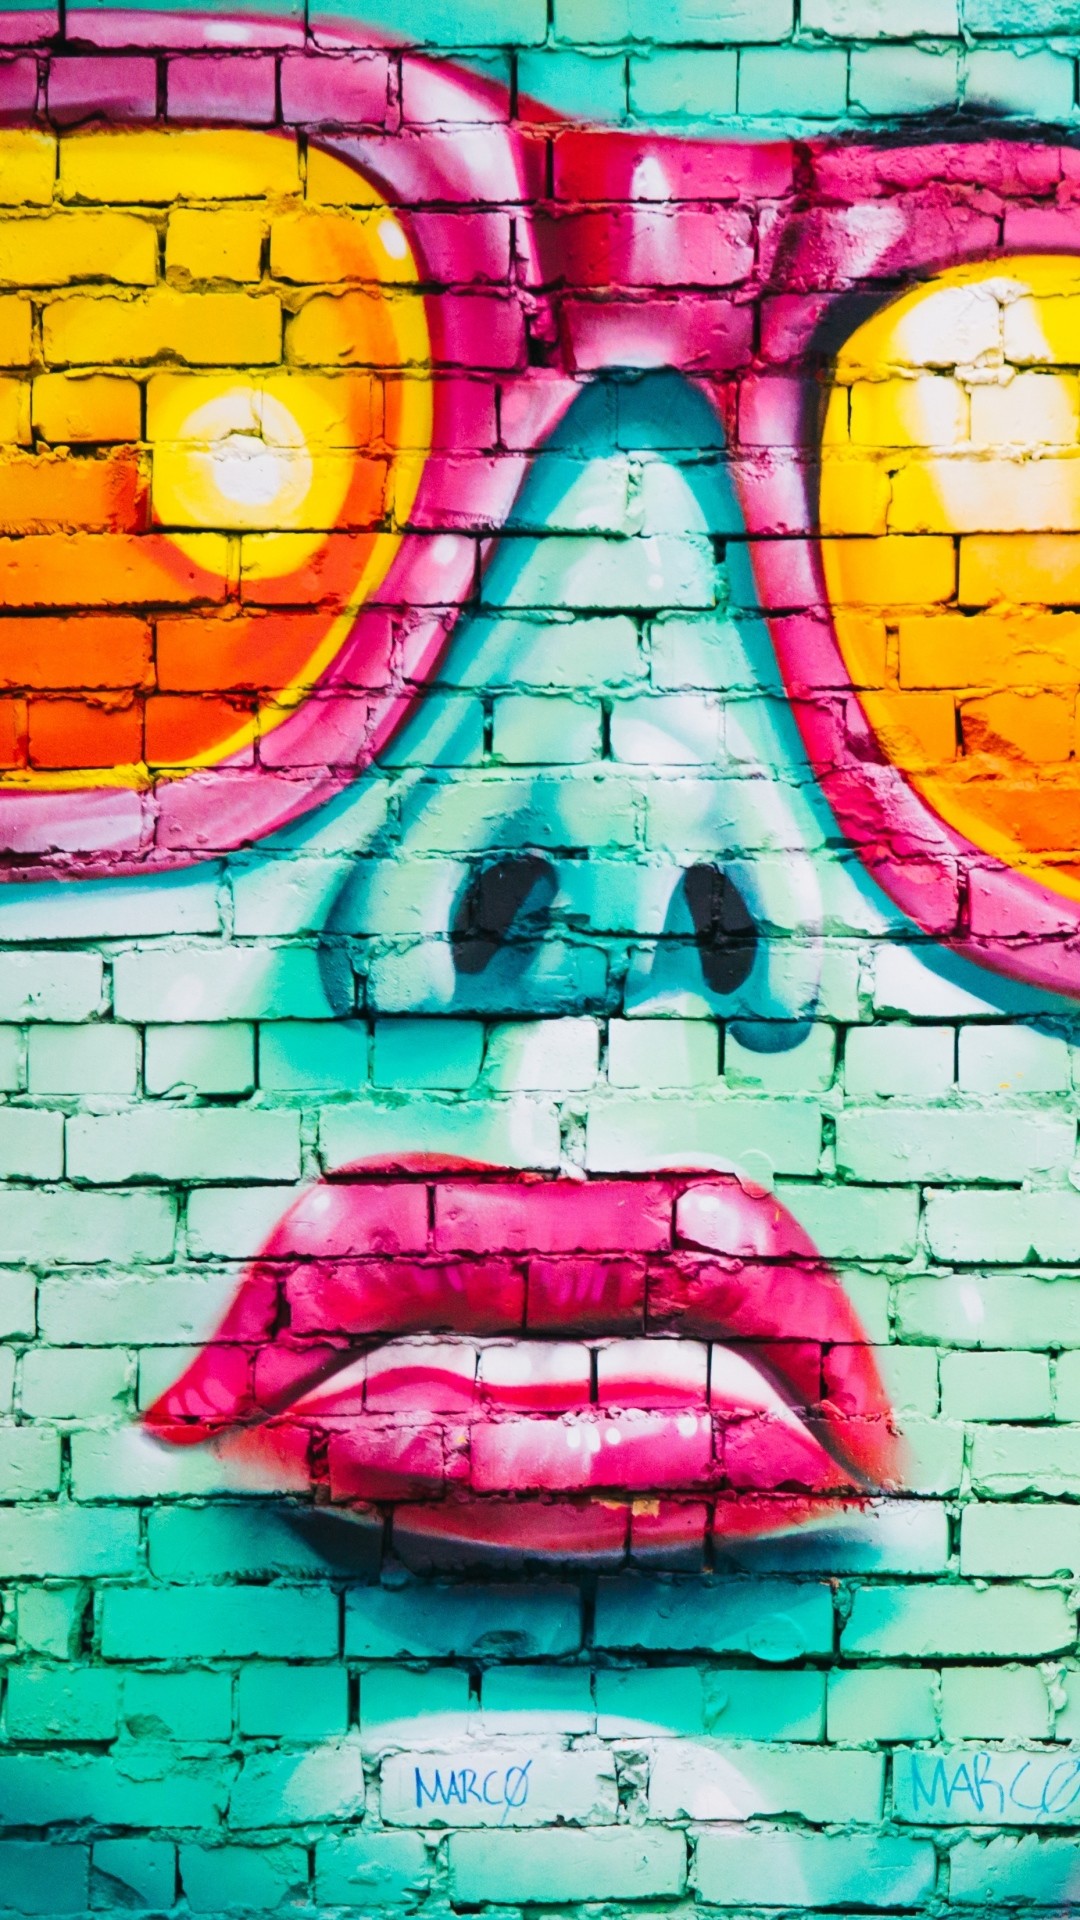 carta da parati graffiti per pareti,arte,graffiti,parete,bocca,illustrazione